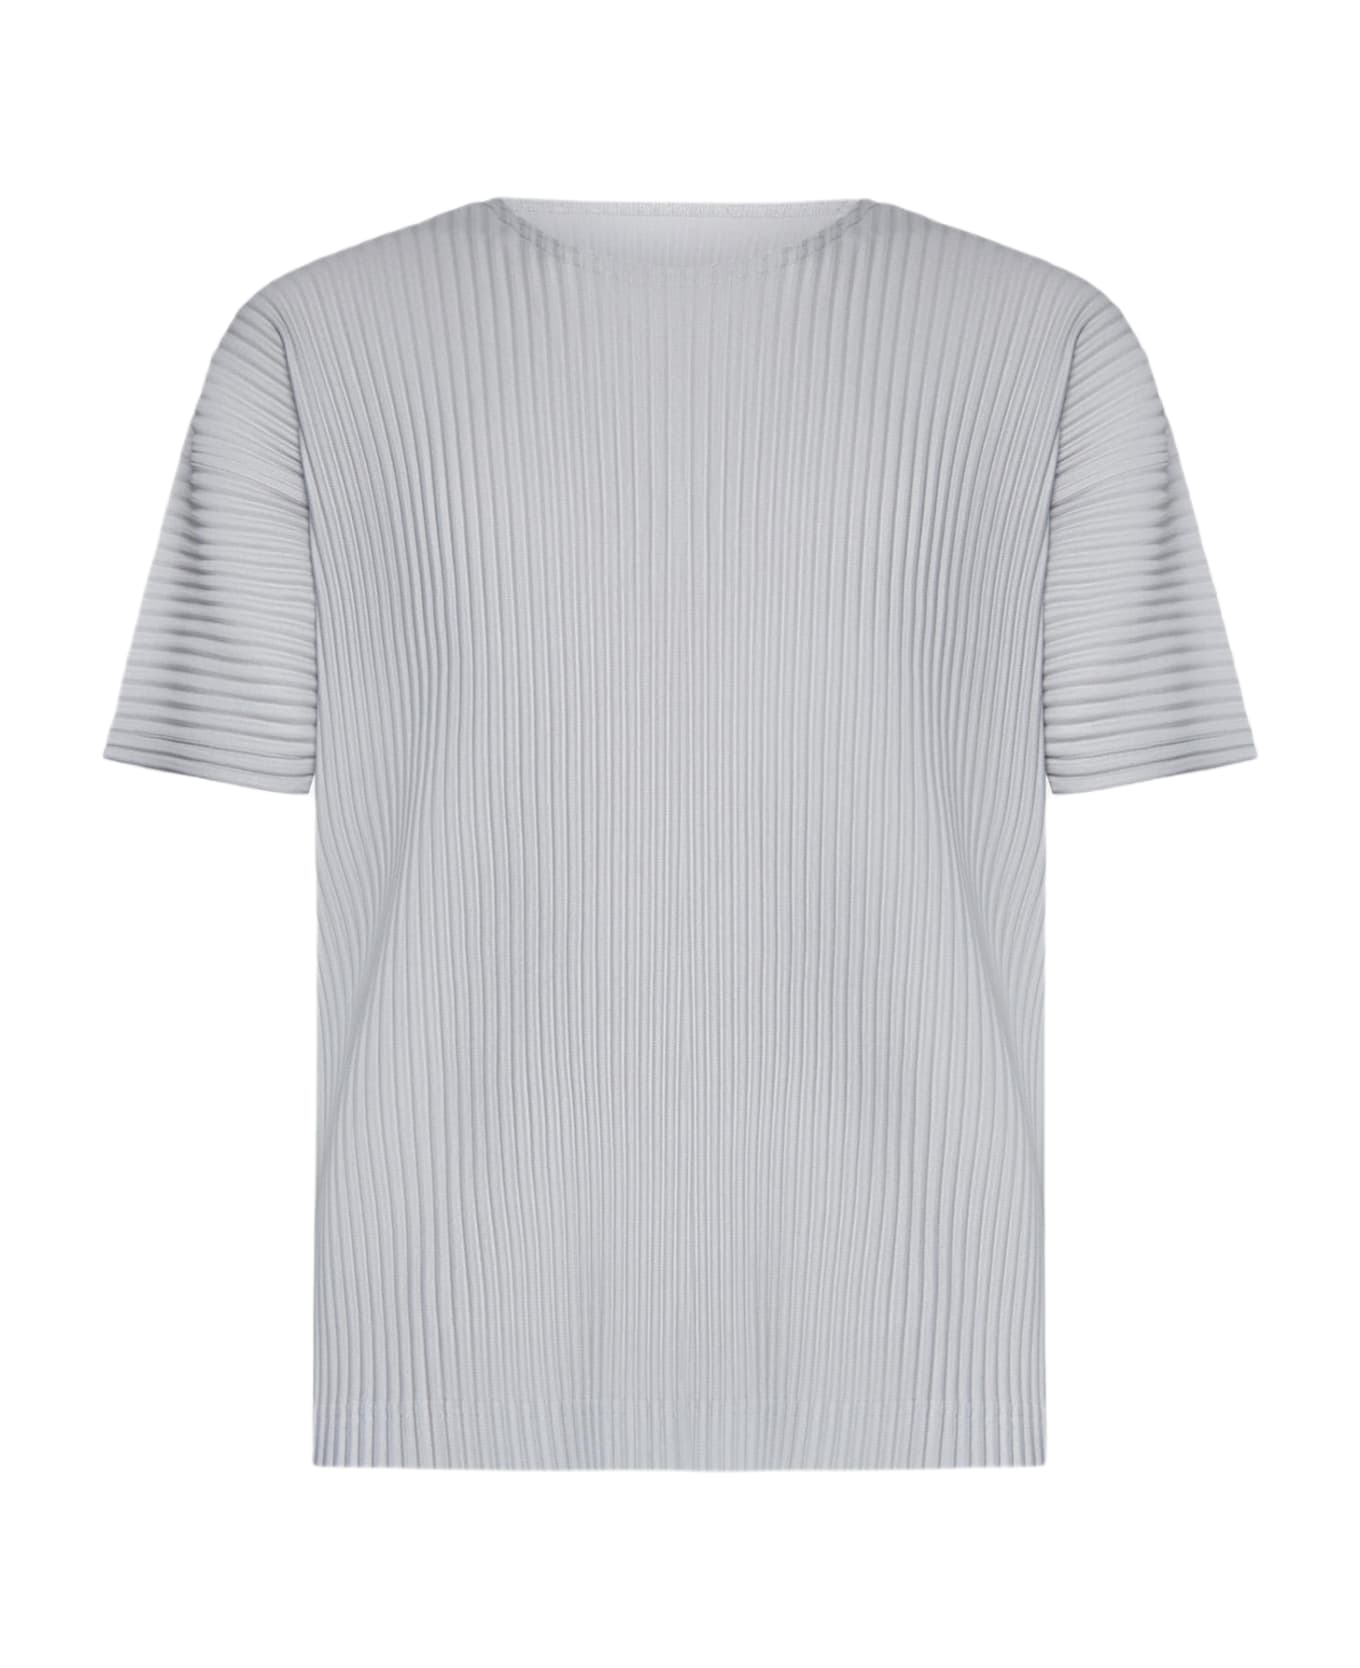 Homme Plissé Issey Miyake Pleated Fabric T-shirt - Light Grey